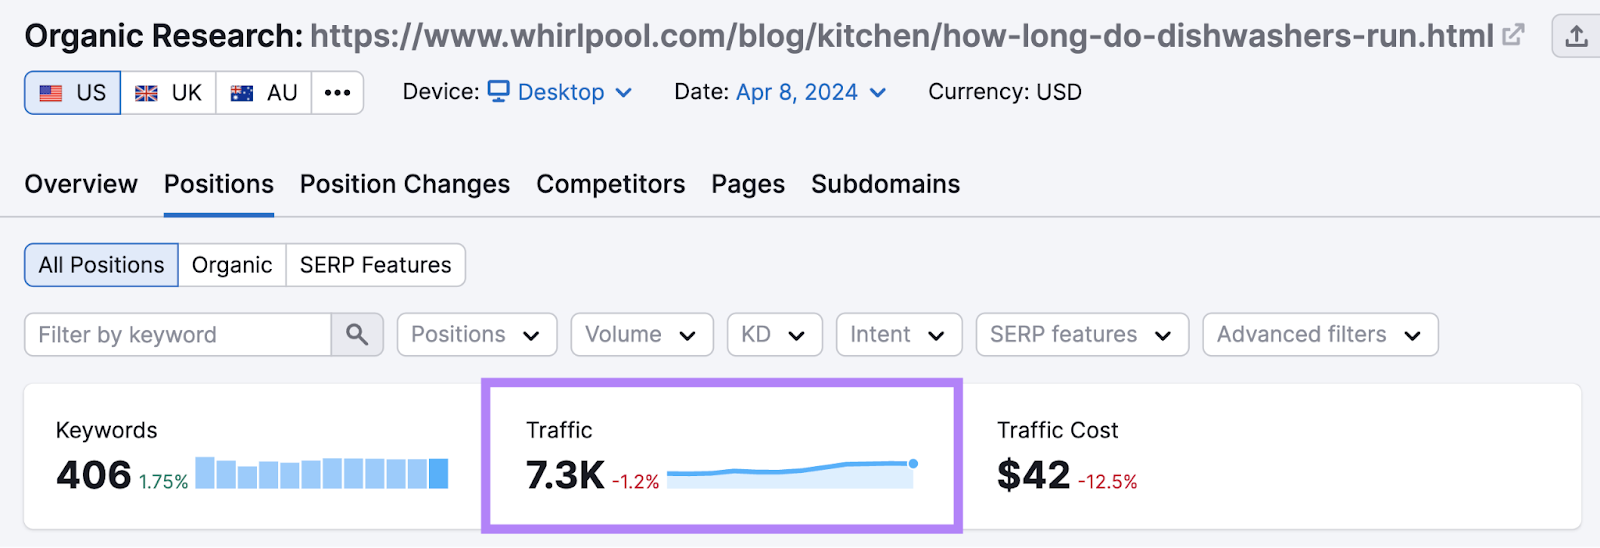 Whirlpool blog traffic is 7, 300